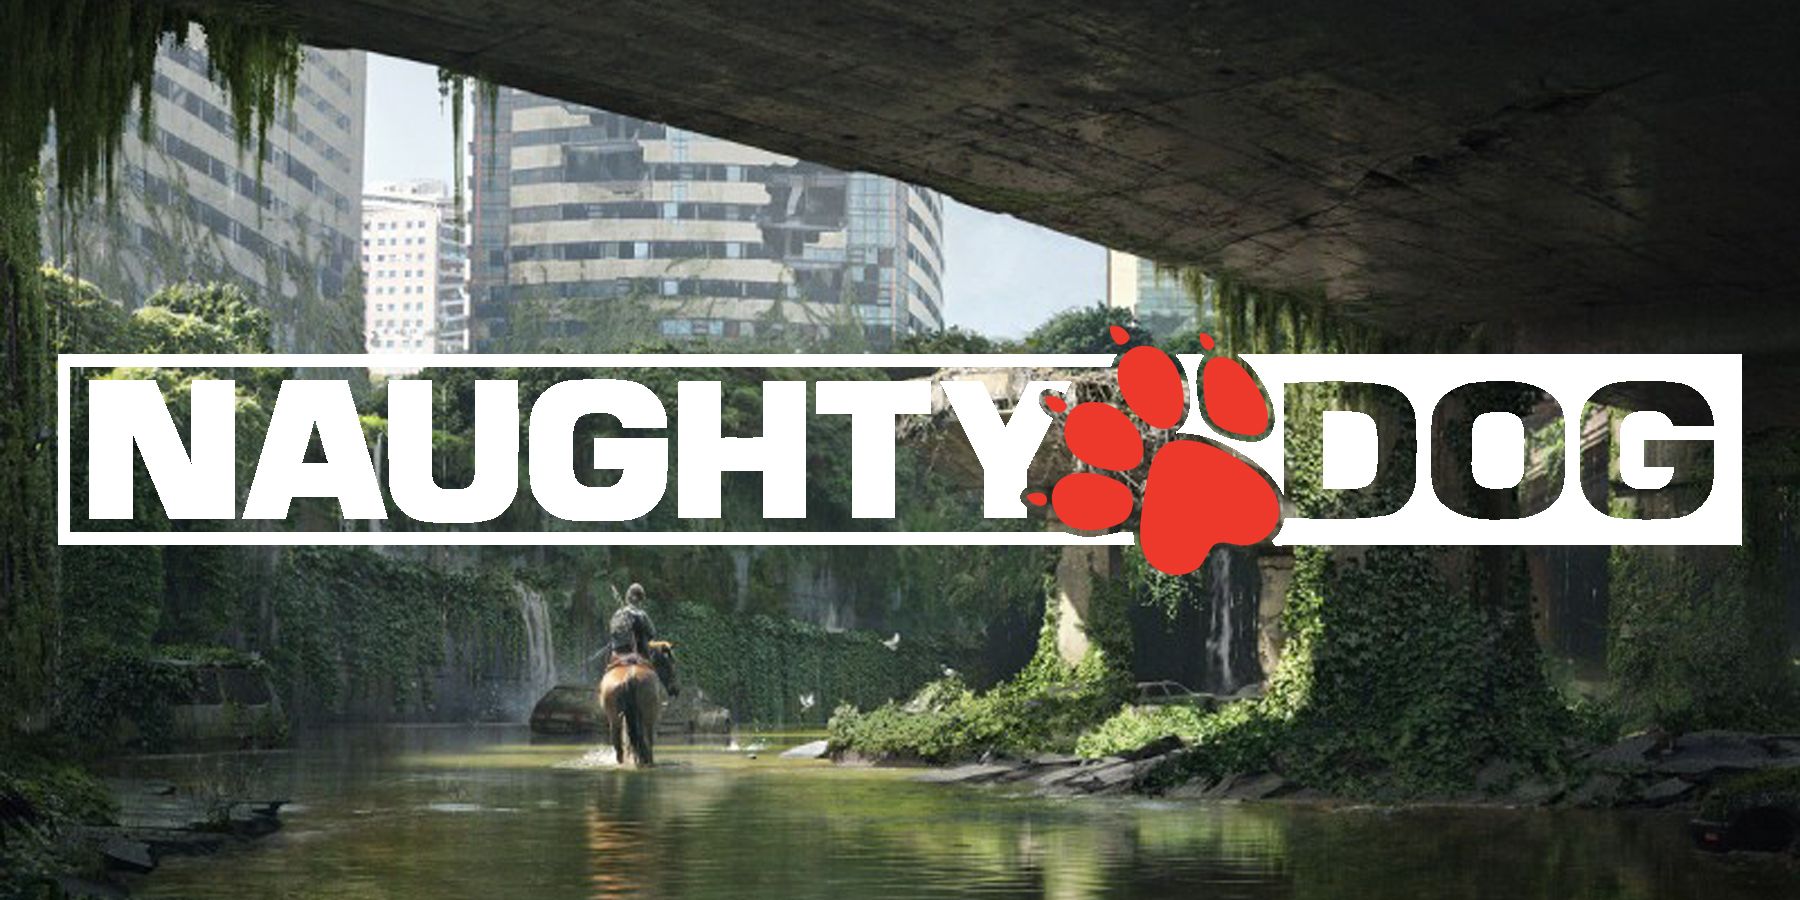 Naughty Dog Last of Us 2 logo